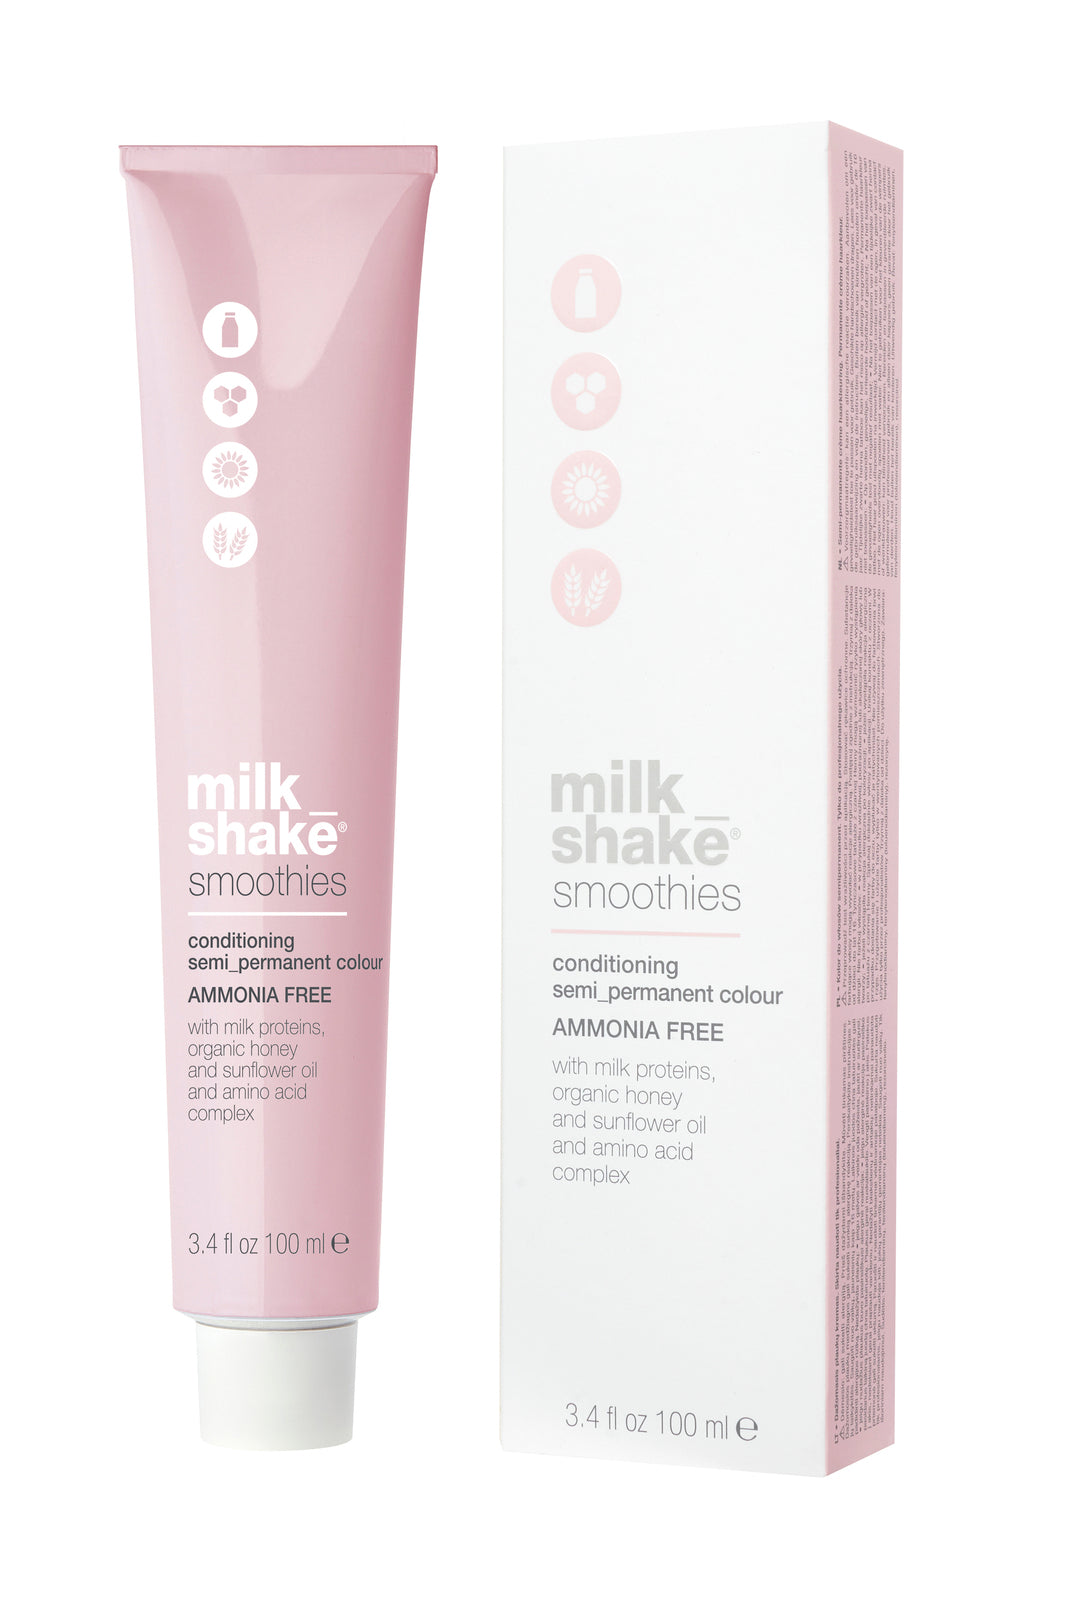 Milkshake smoothies semi-permanent color 6.6